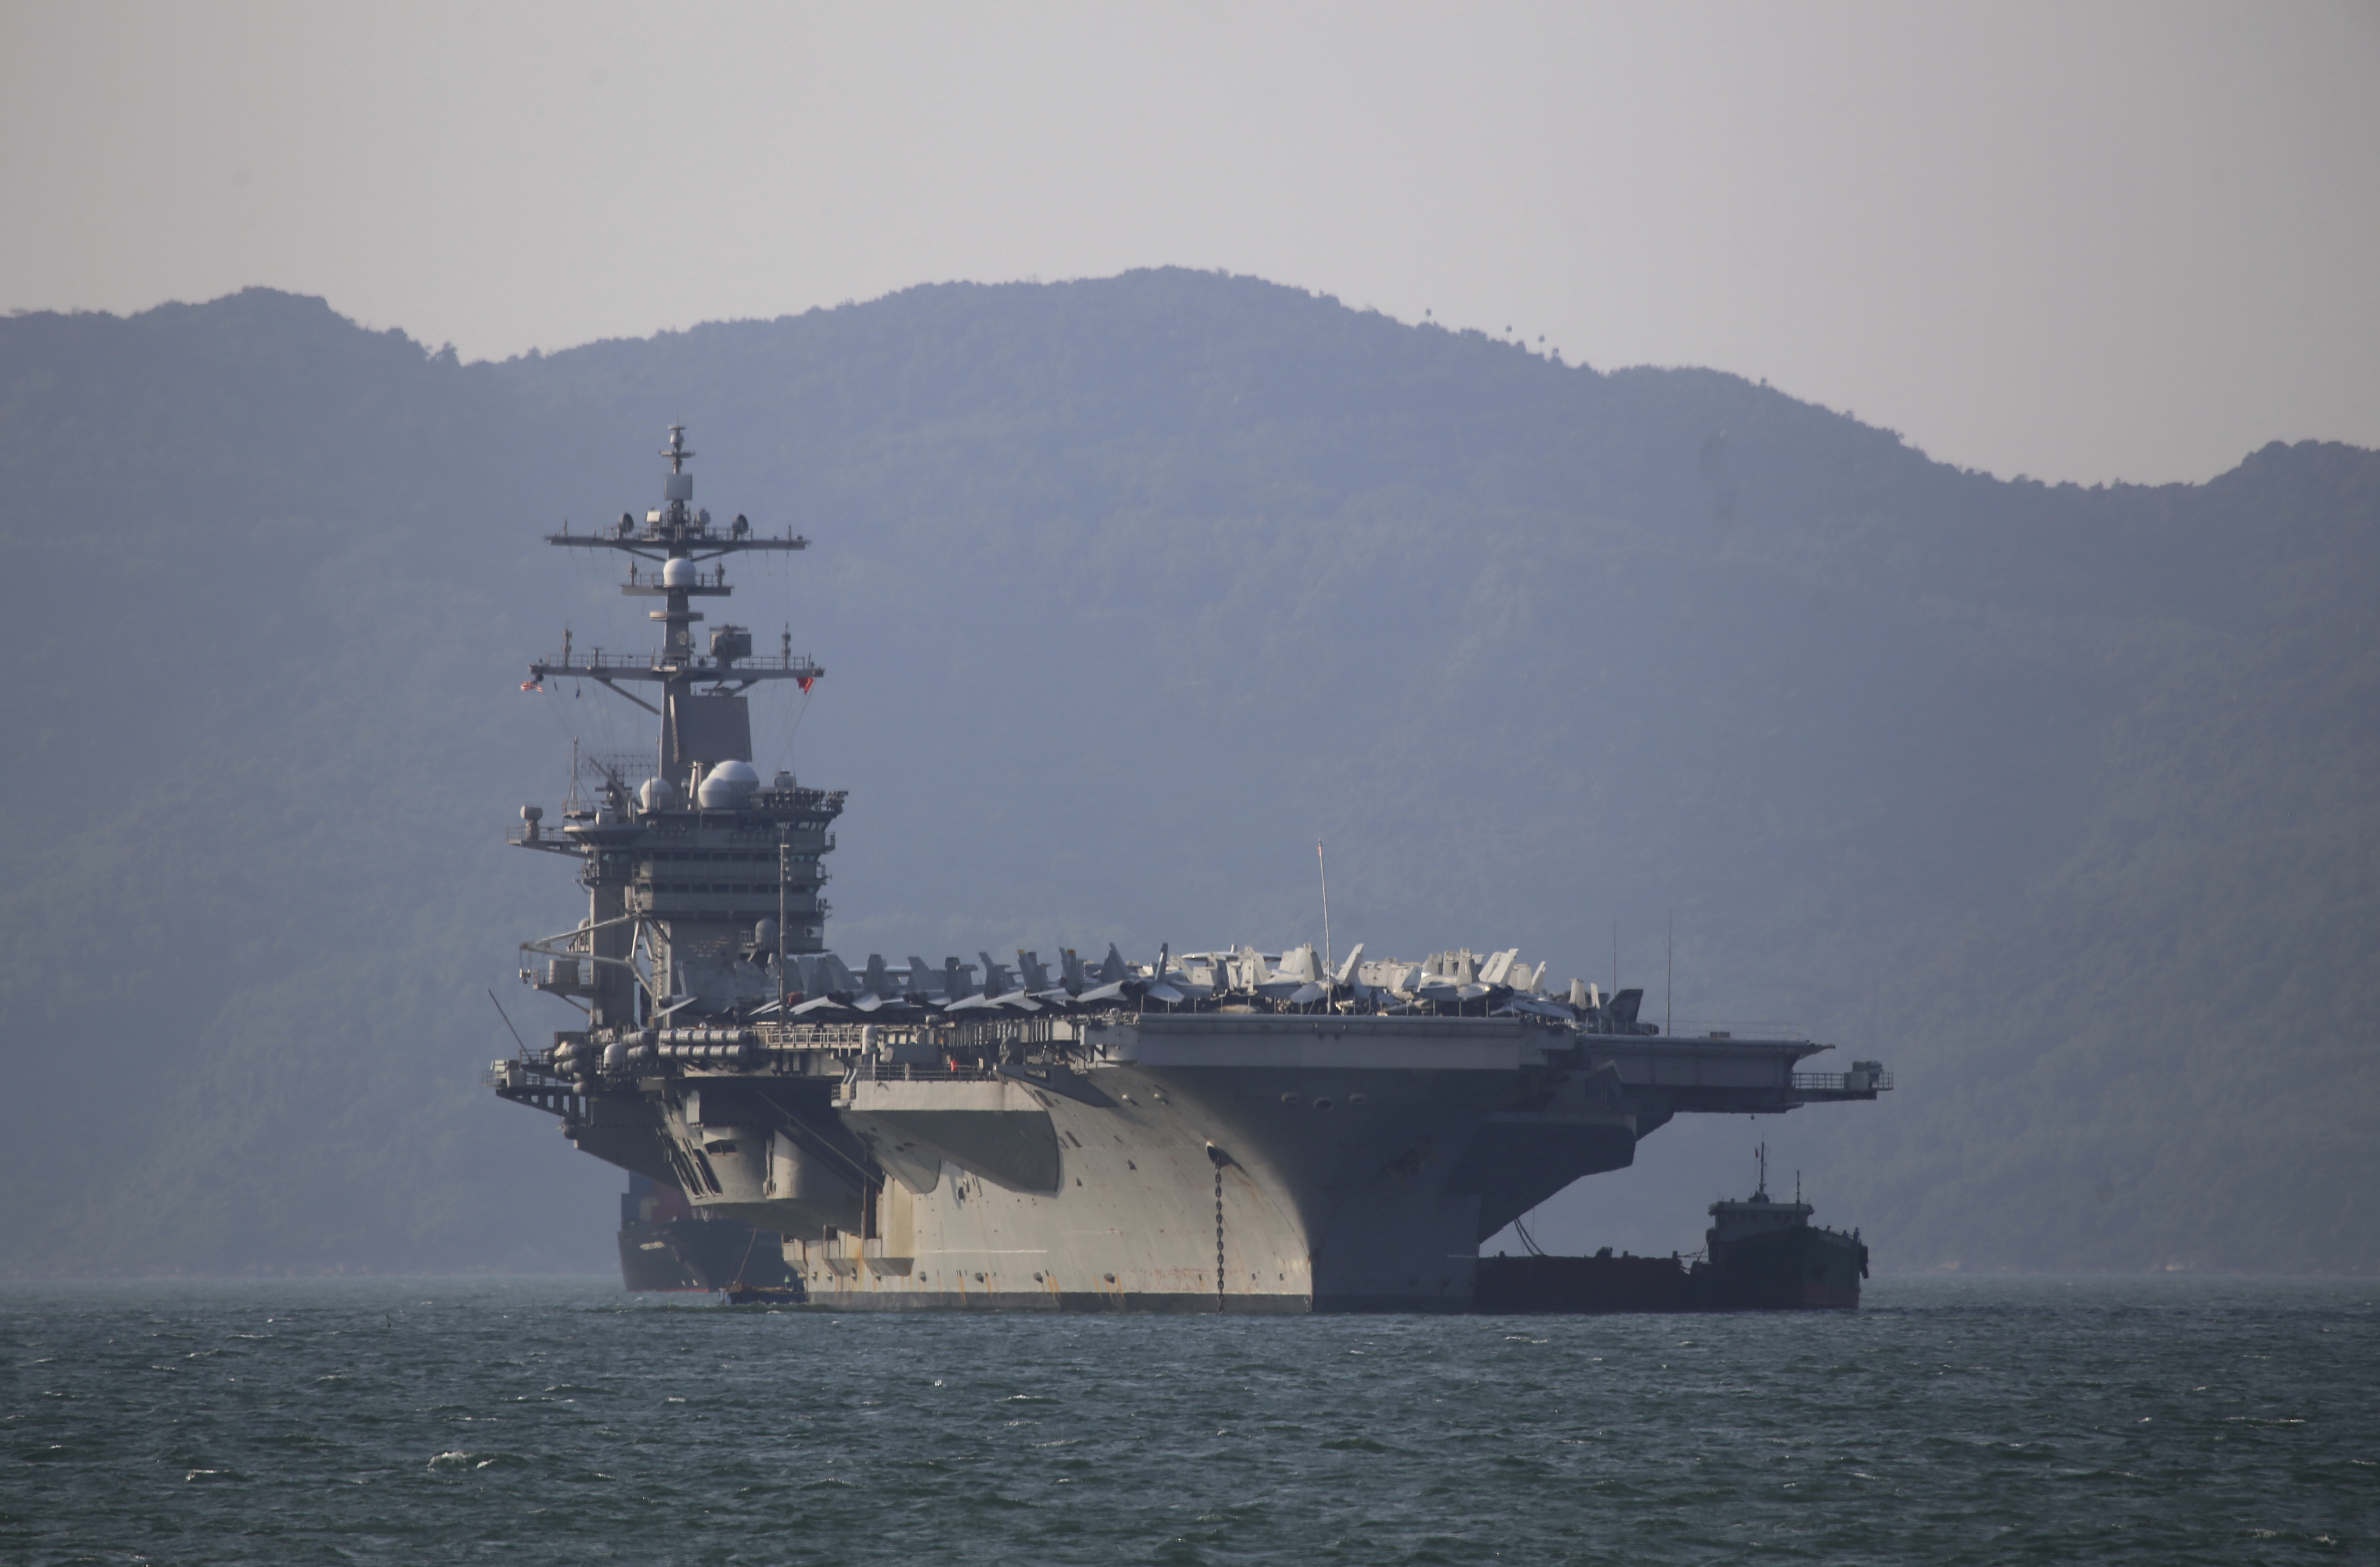 La portaerei USS Carl Vinson in visita nel Vietnam